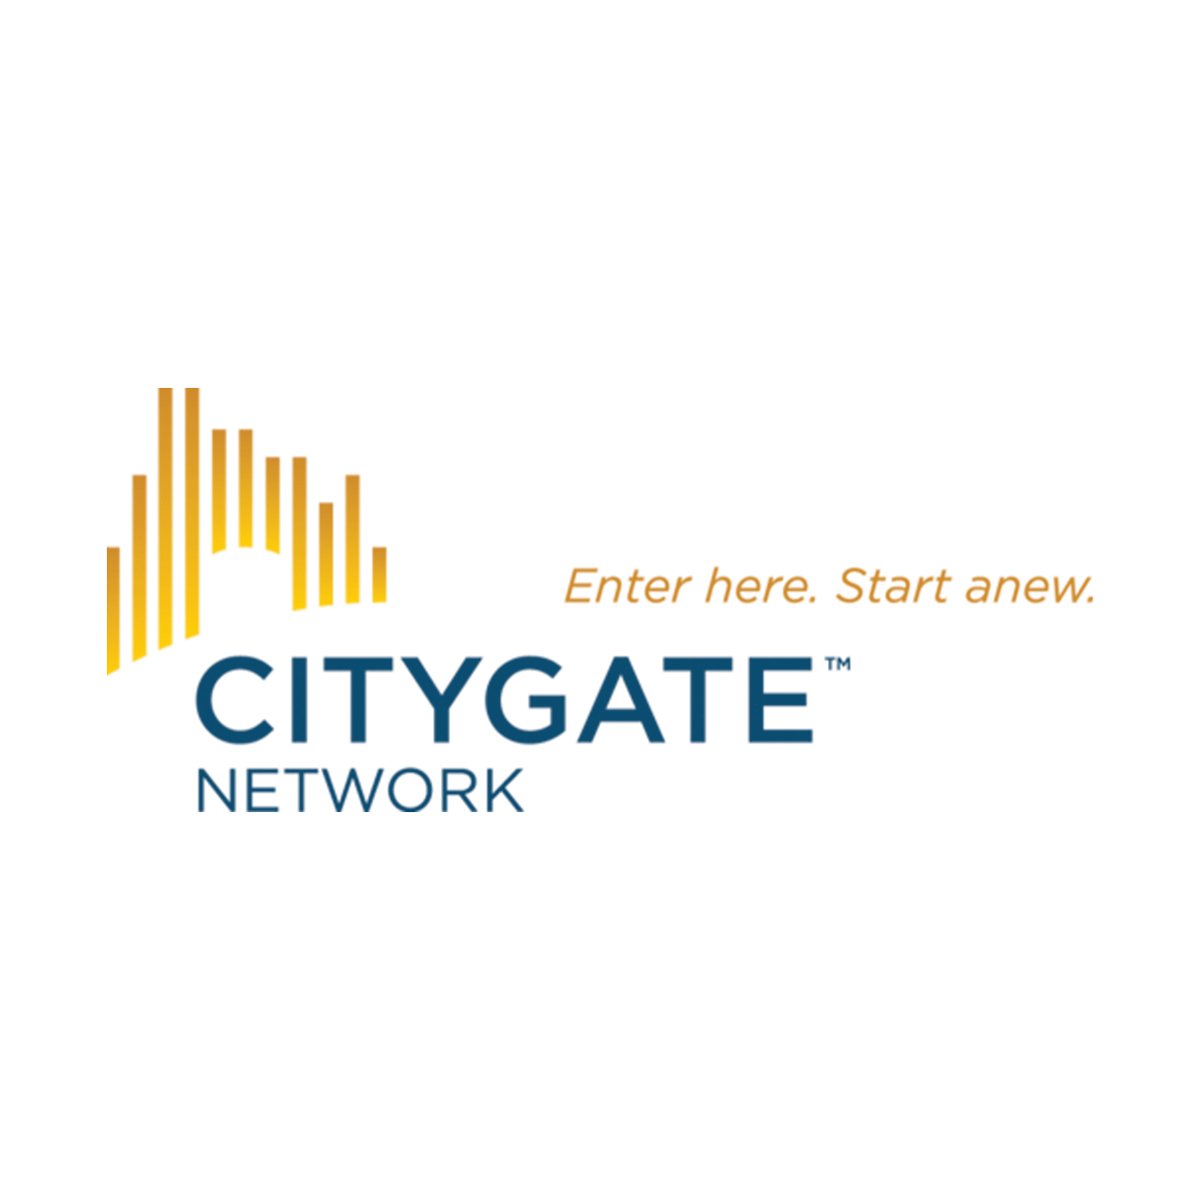 CitygateNetwork_thumb.jpg